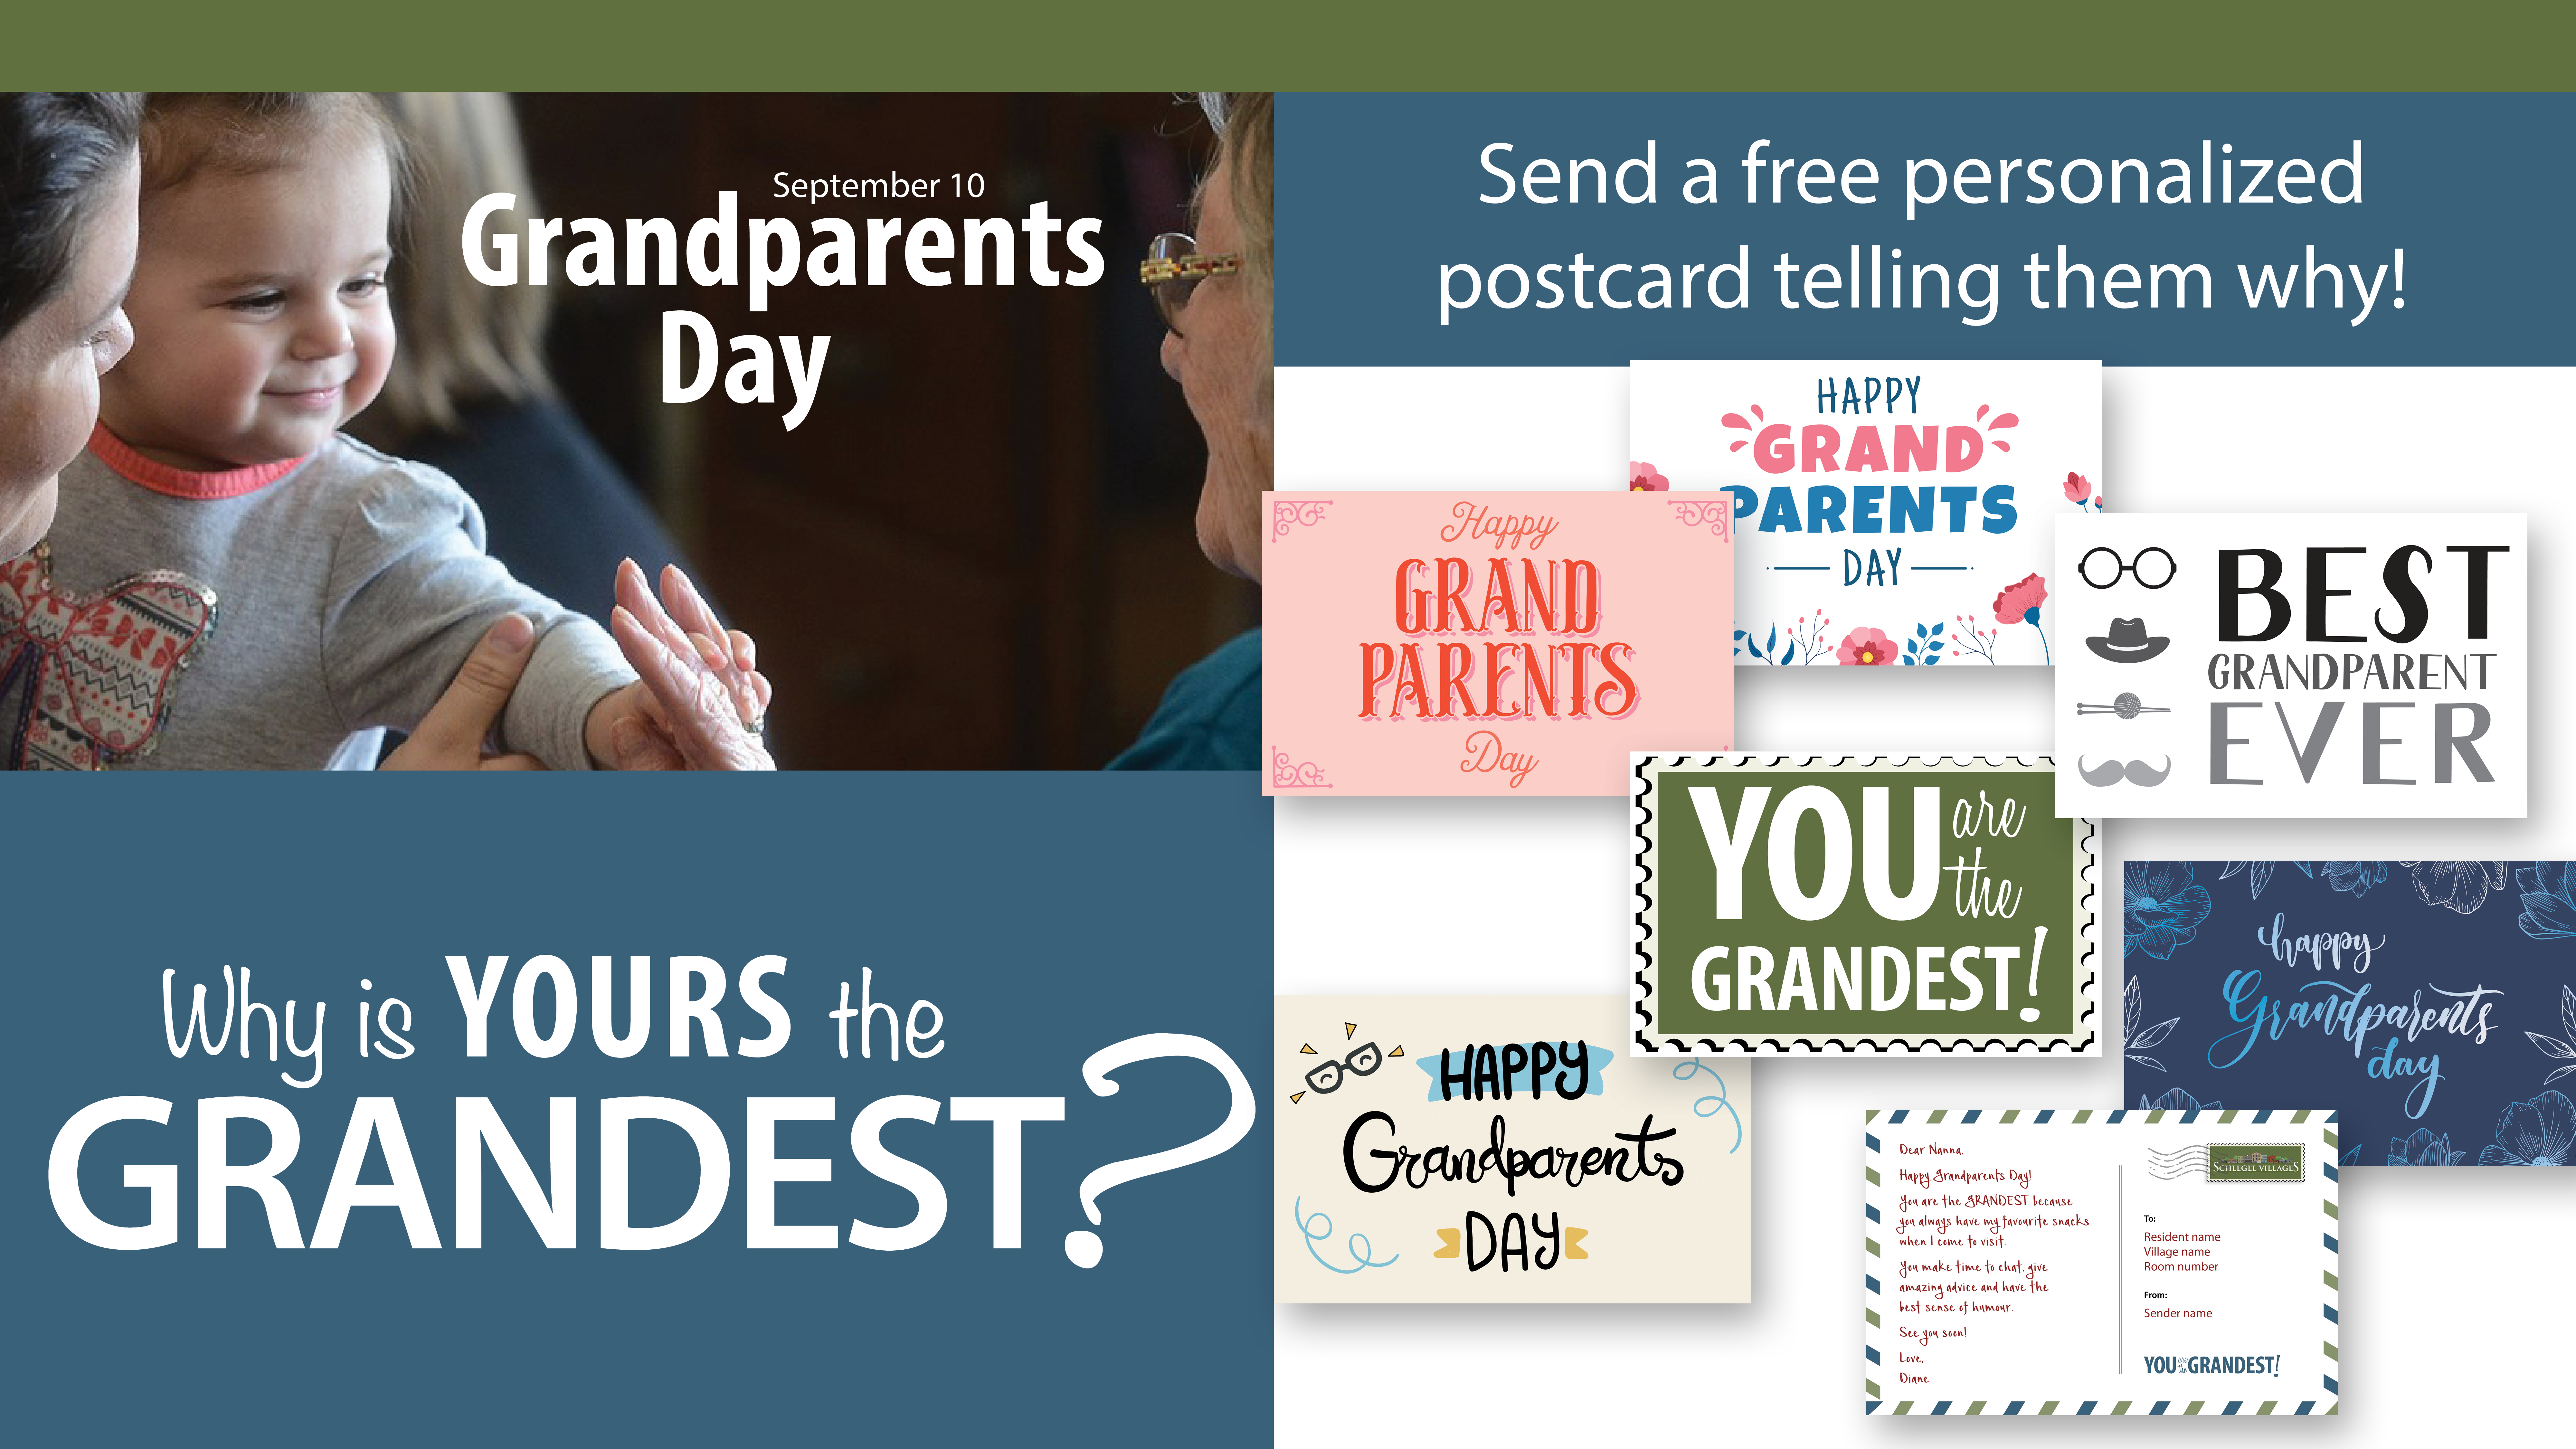 Grandparents Day postcards